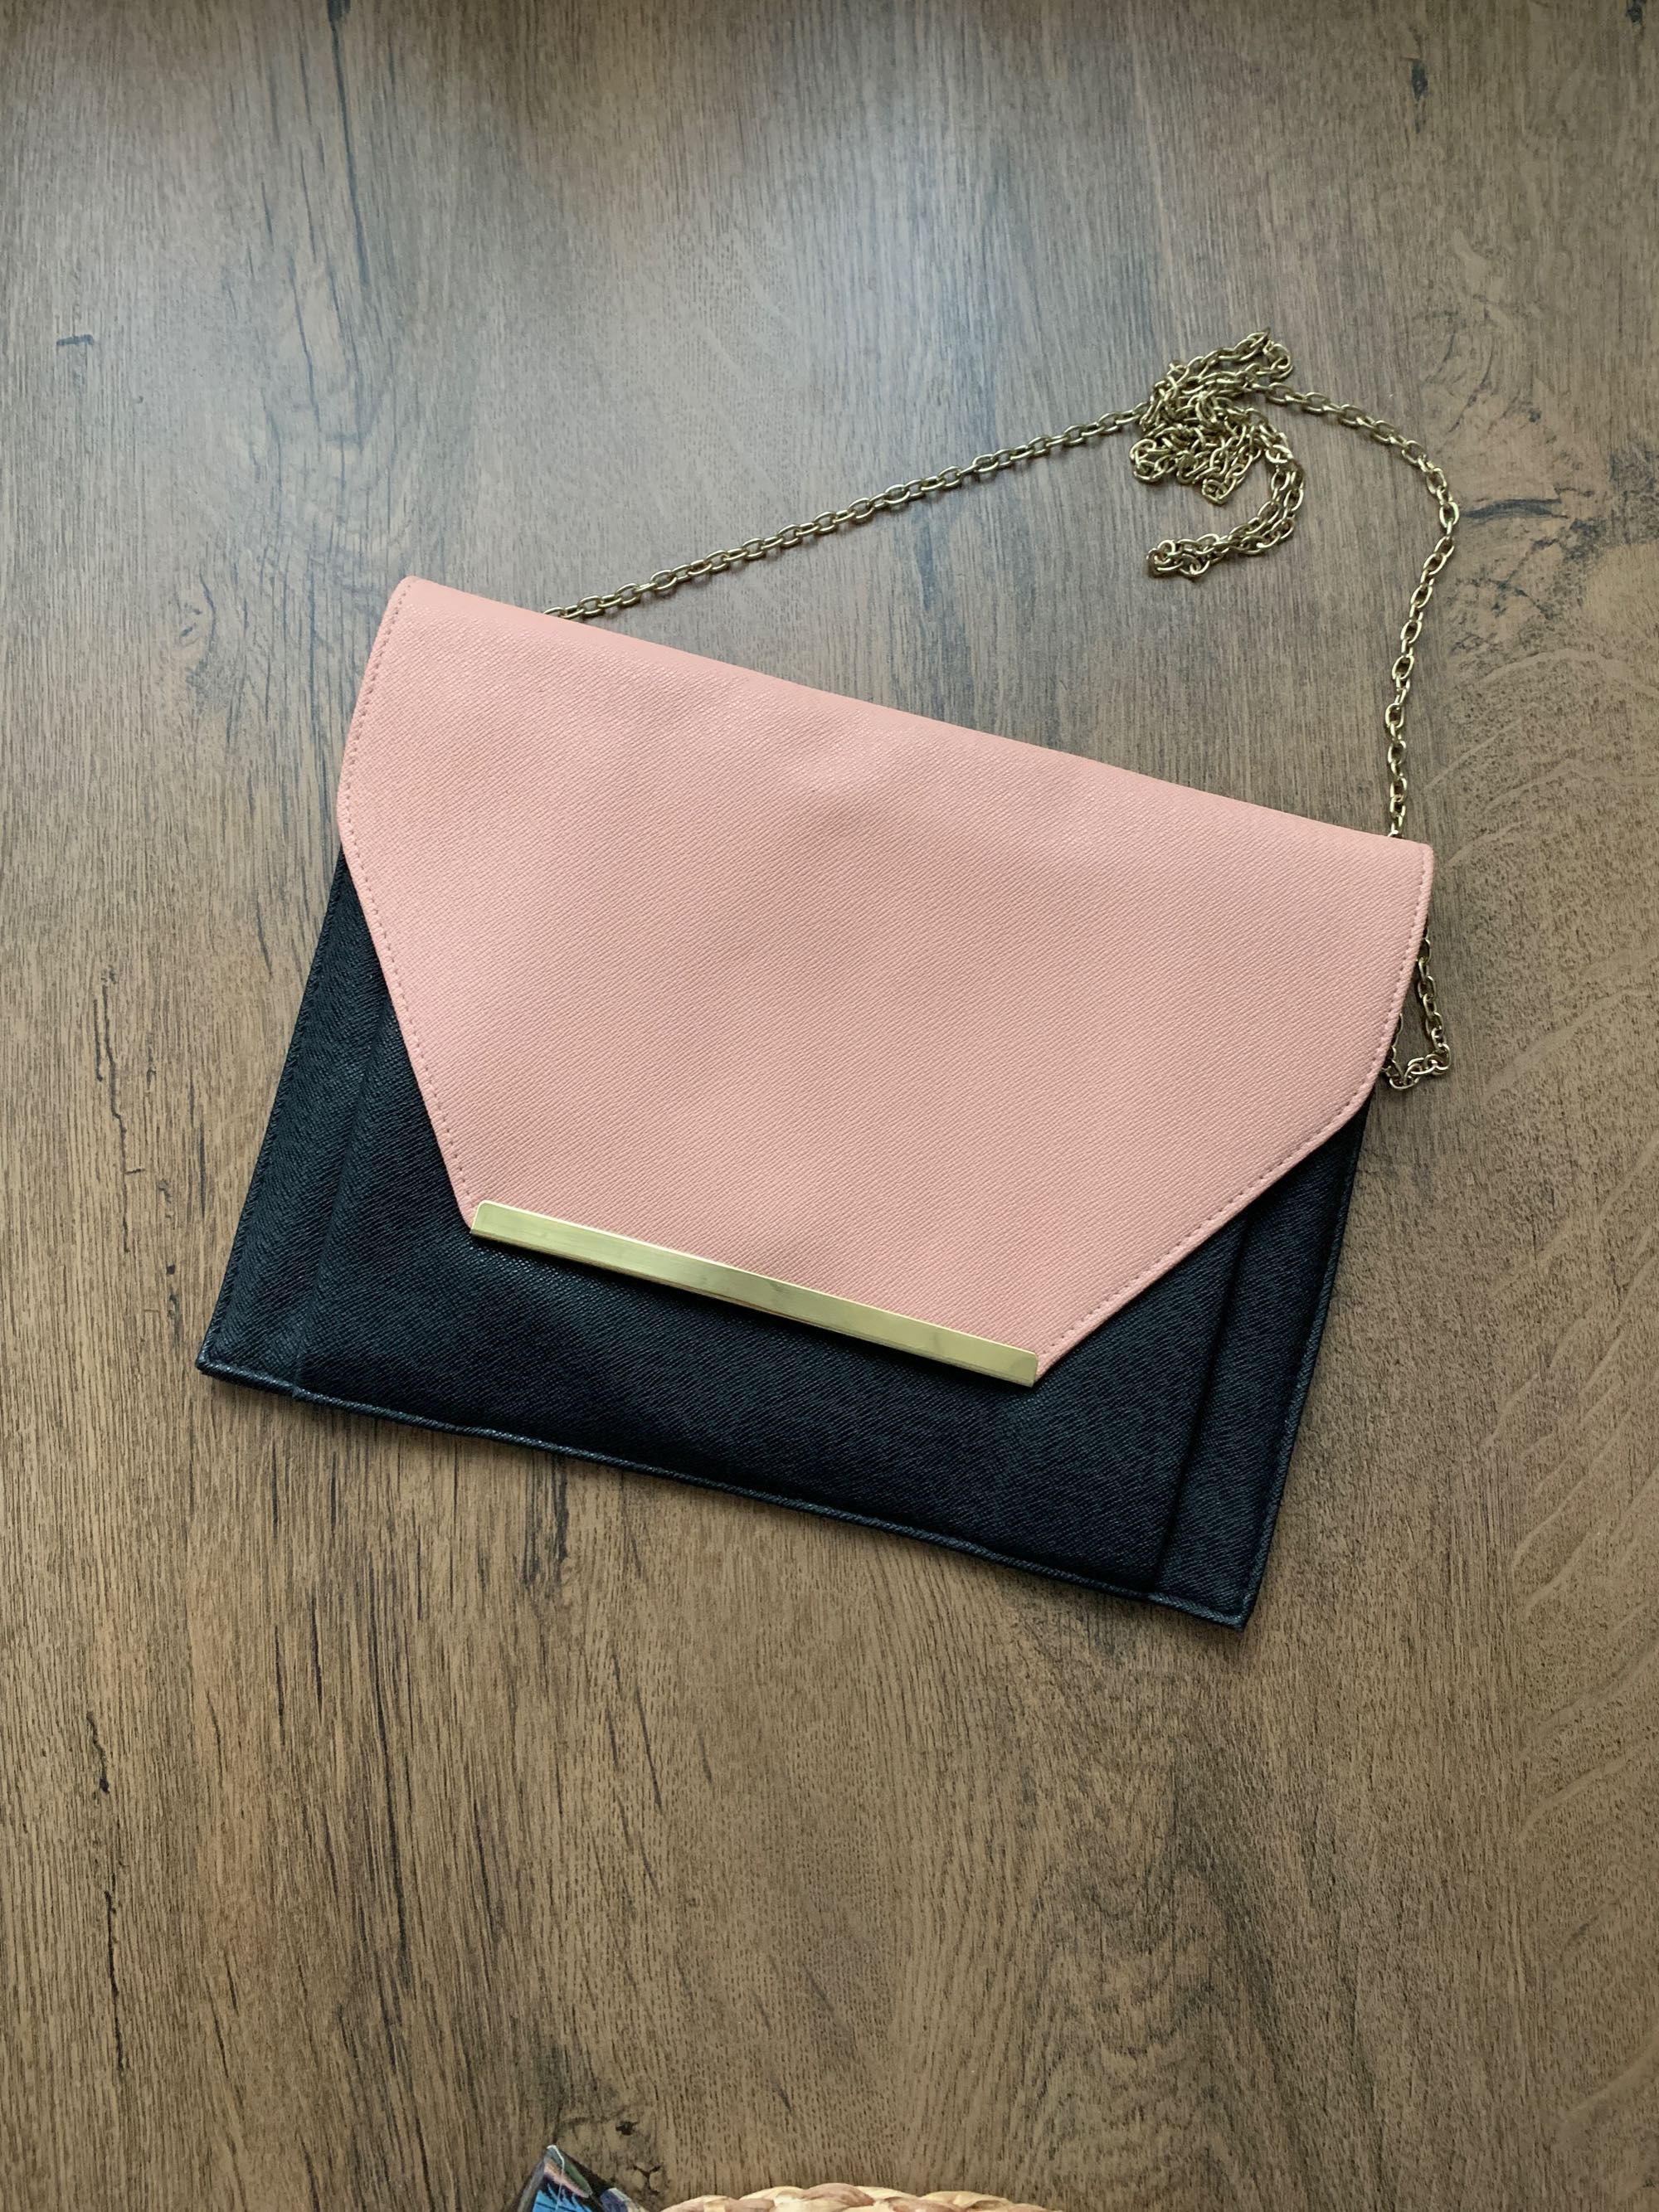 Czarno-różowa kopertówka torebka na długim pasku